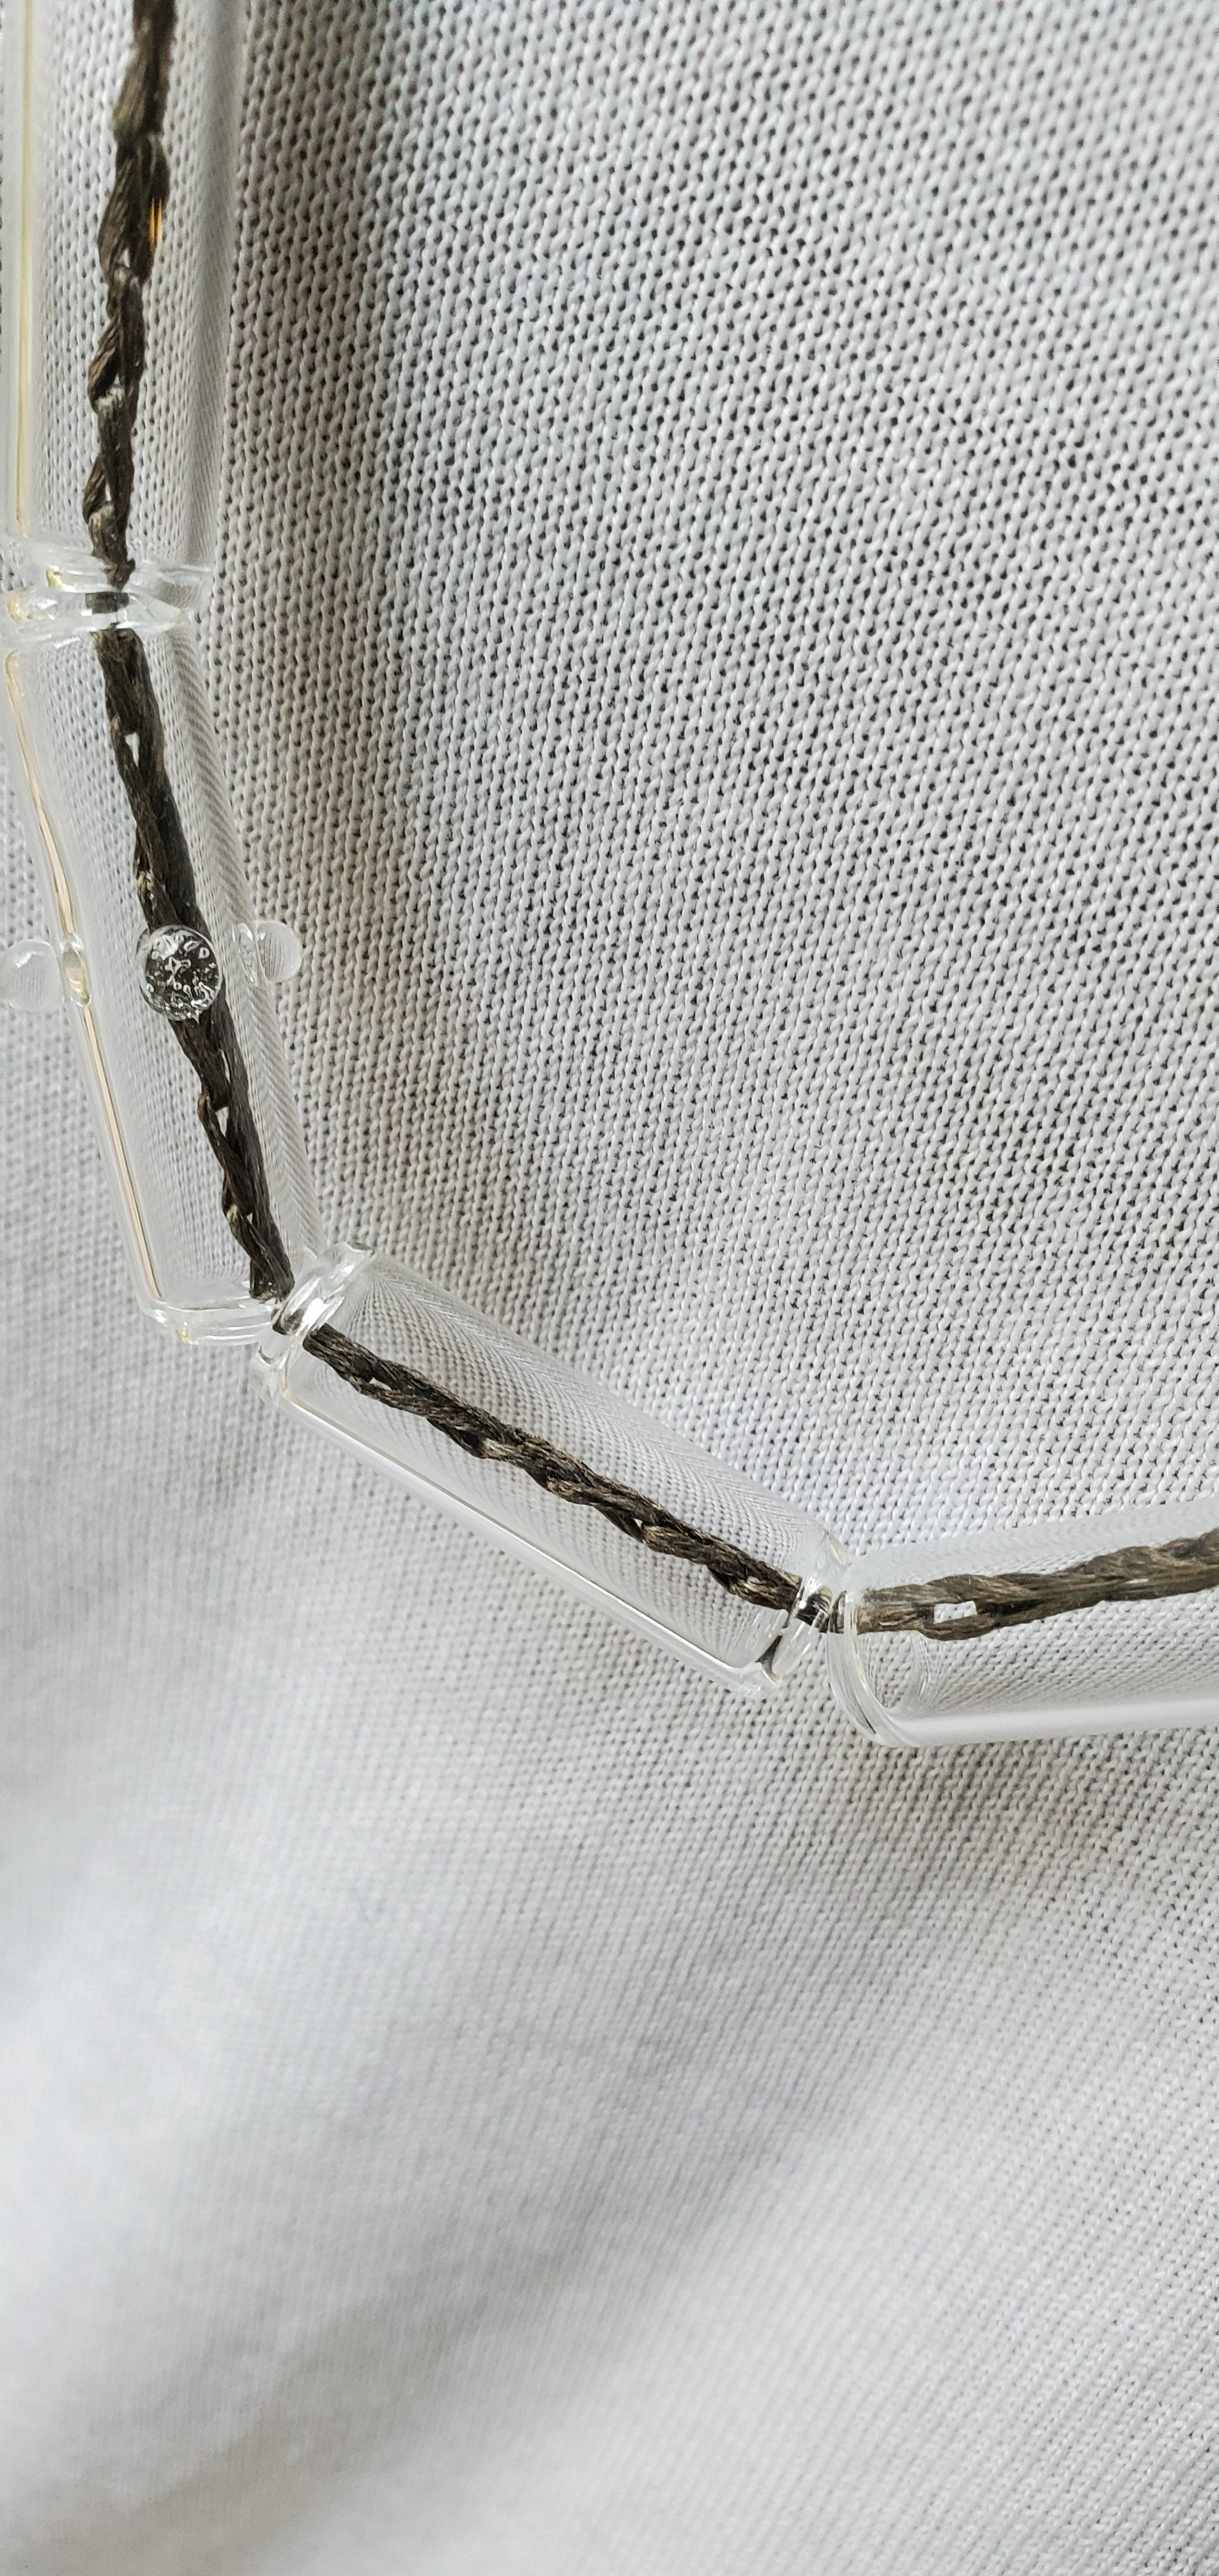 single strand dark- coal crocheted with clear pyrex tubes- philadelphia